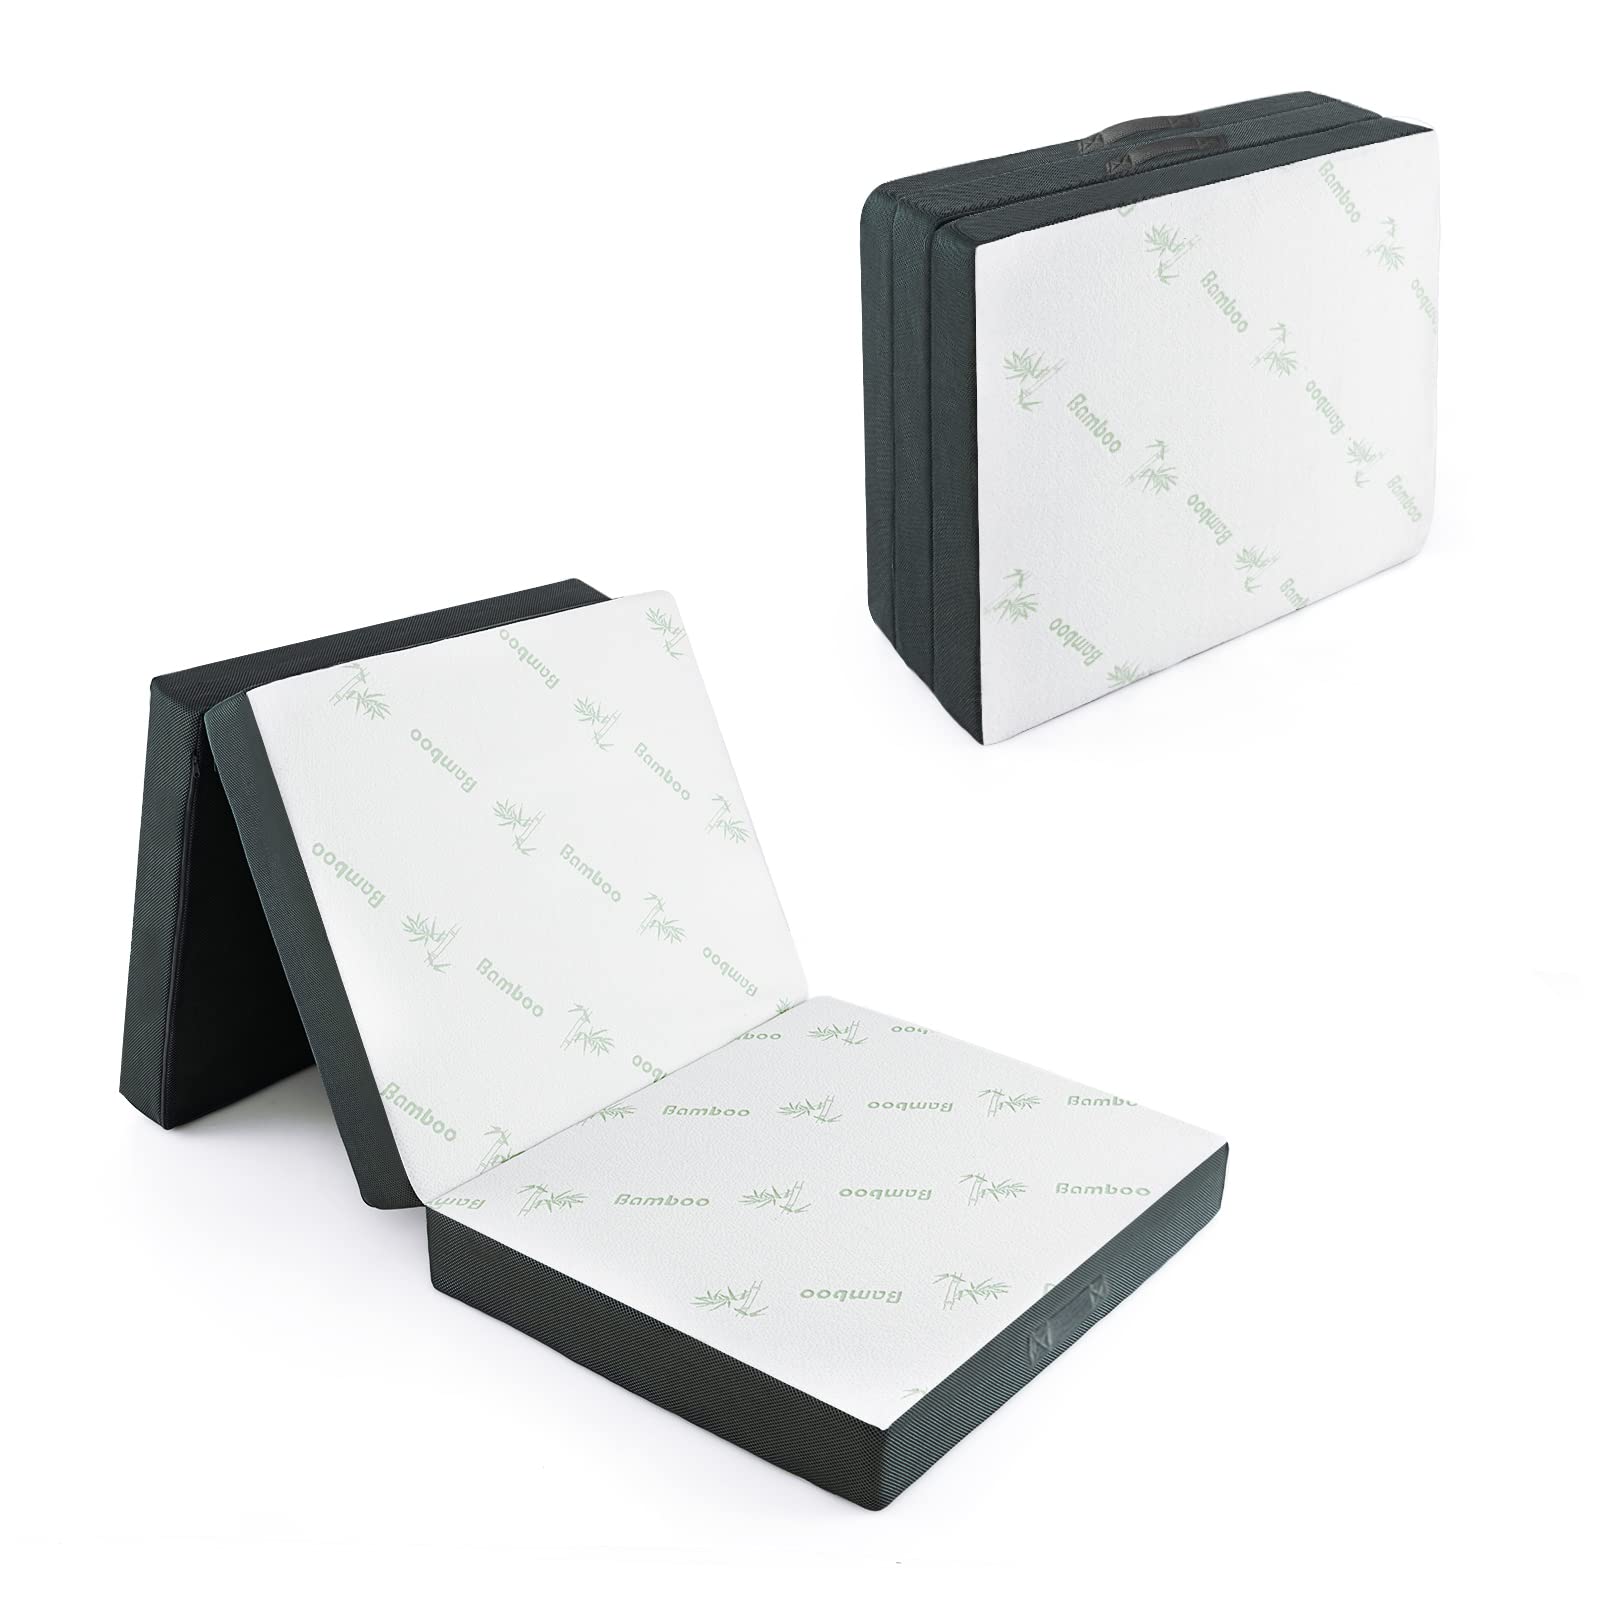 Giantex 4-Inch Tri Folding Mattress, Foam Mattress Topper with Bamboo Fiber Cover (Cot)